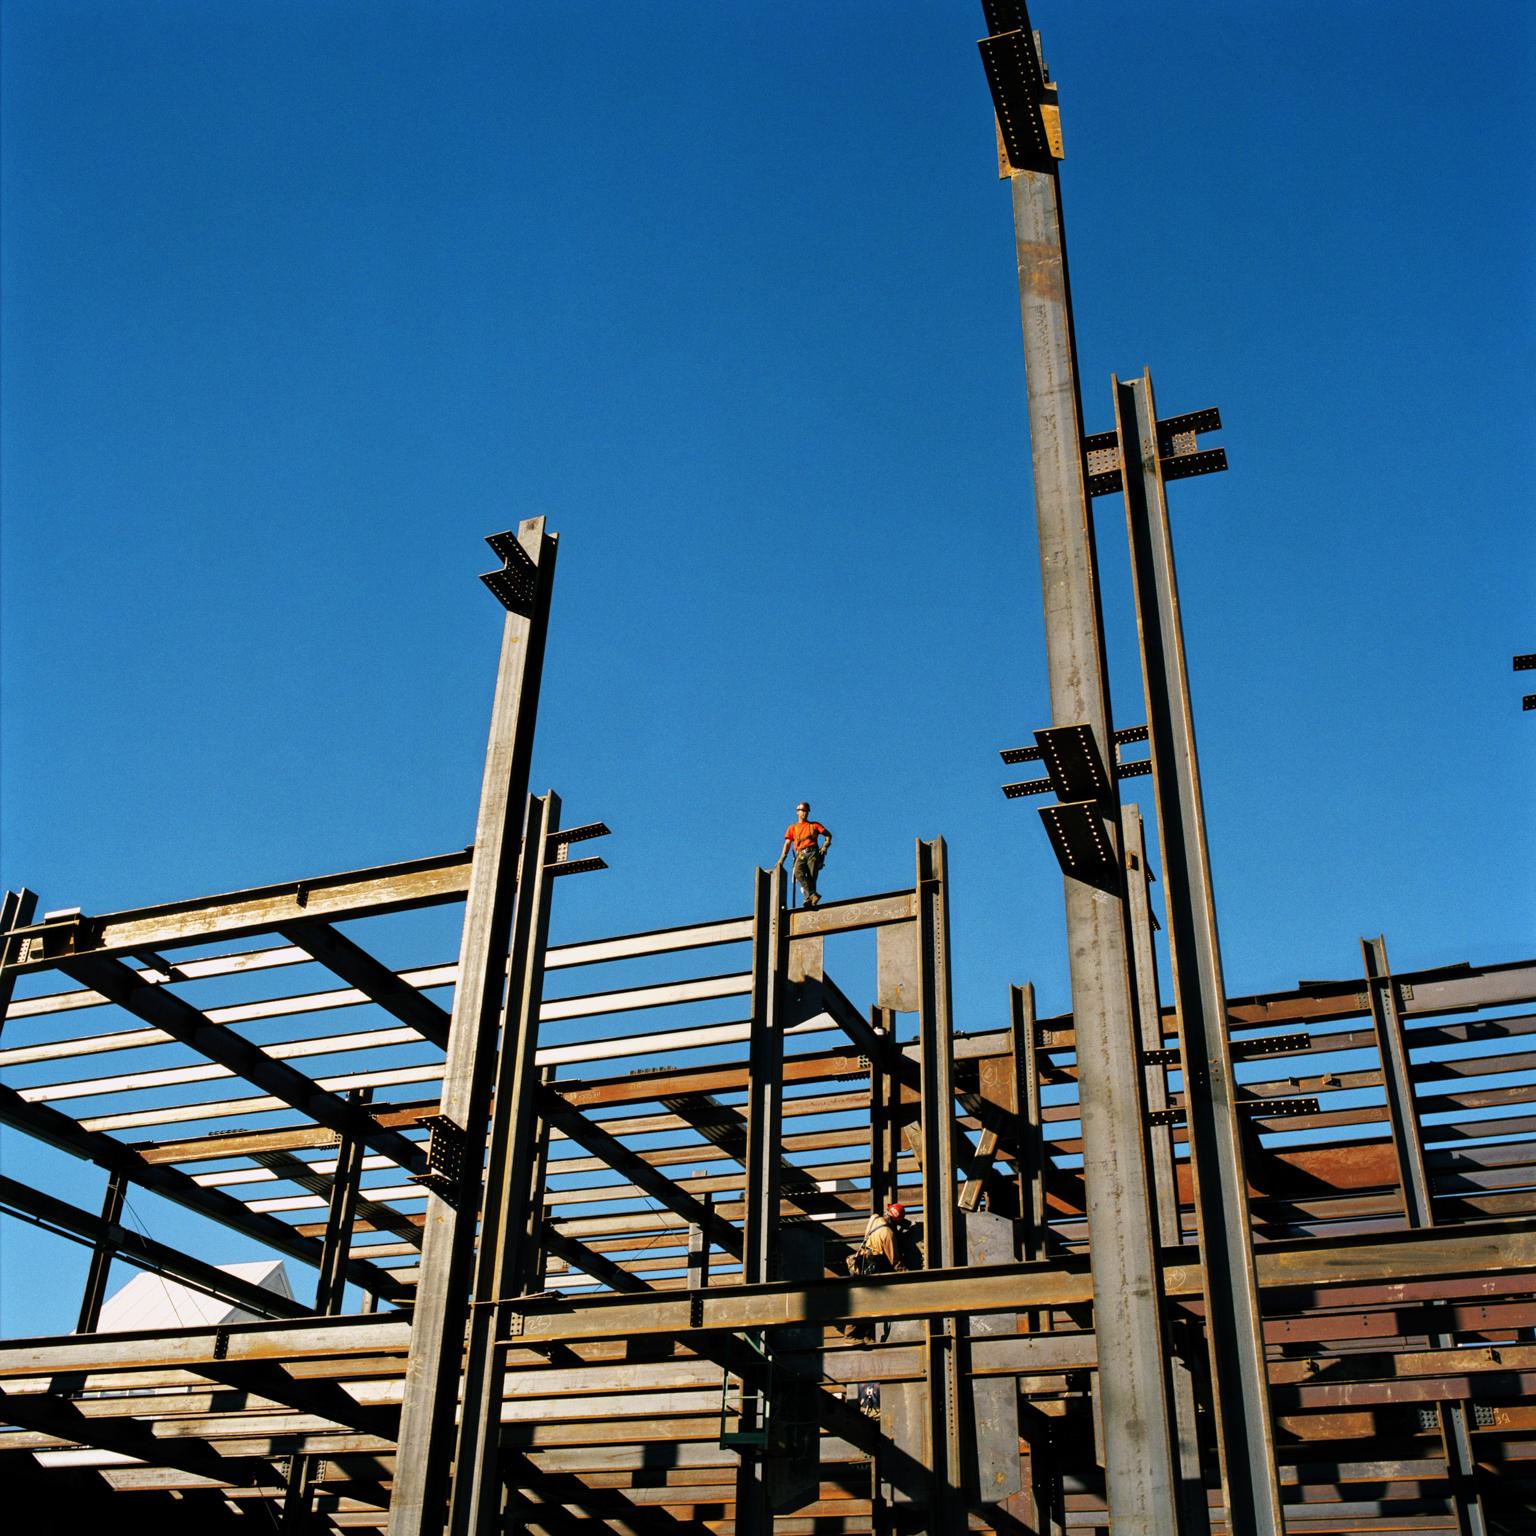 Brian Finke Figurative Photograph - Untitled (Construction)